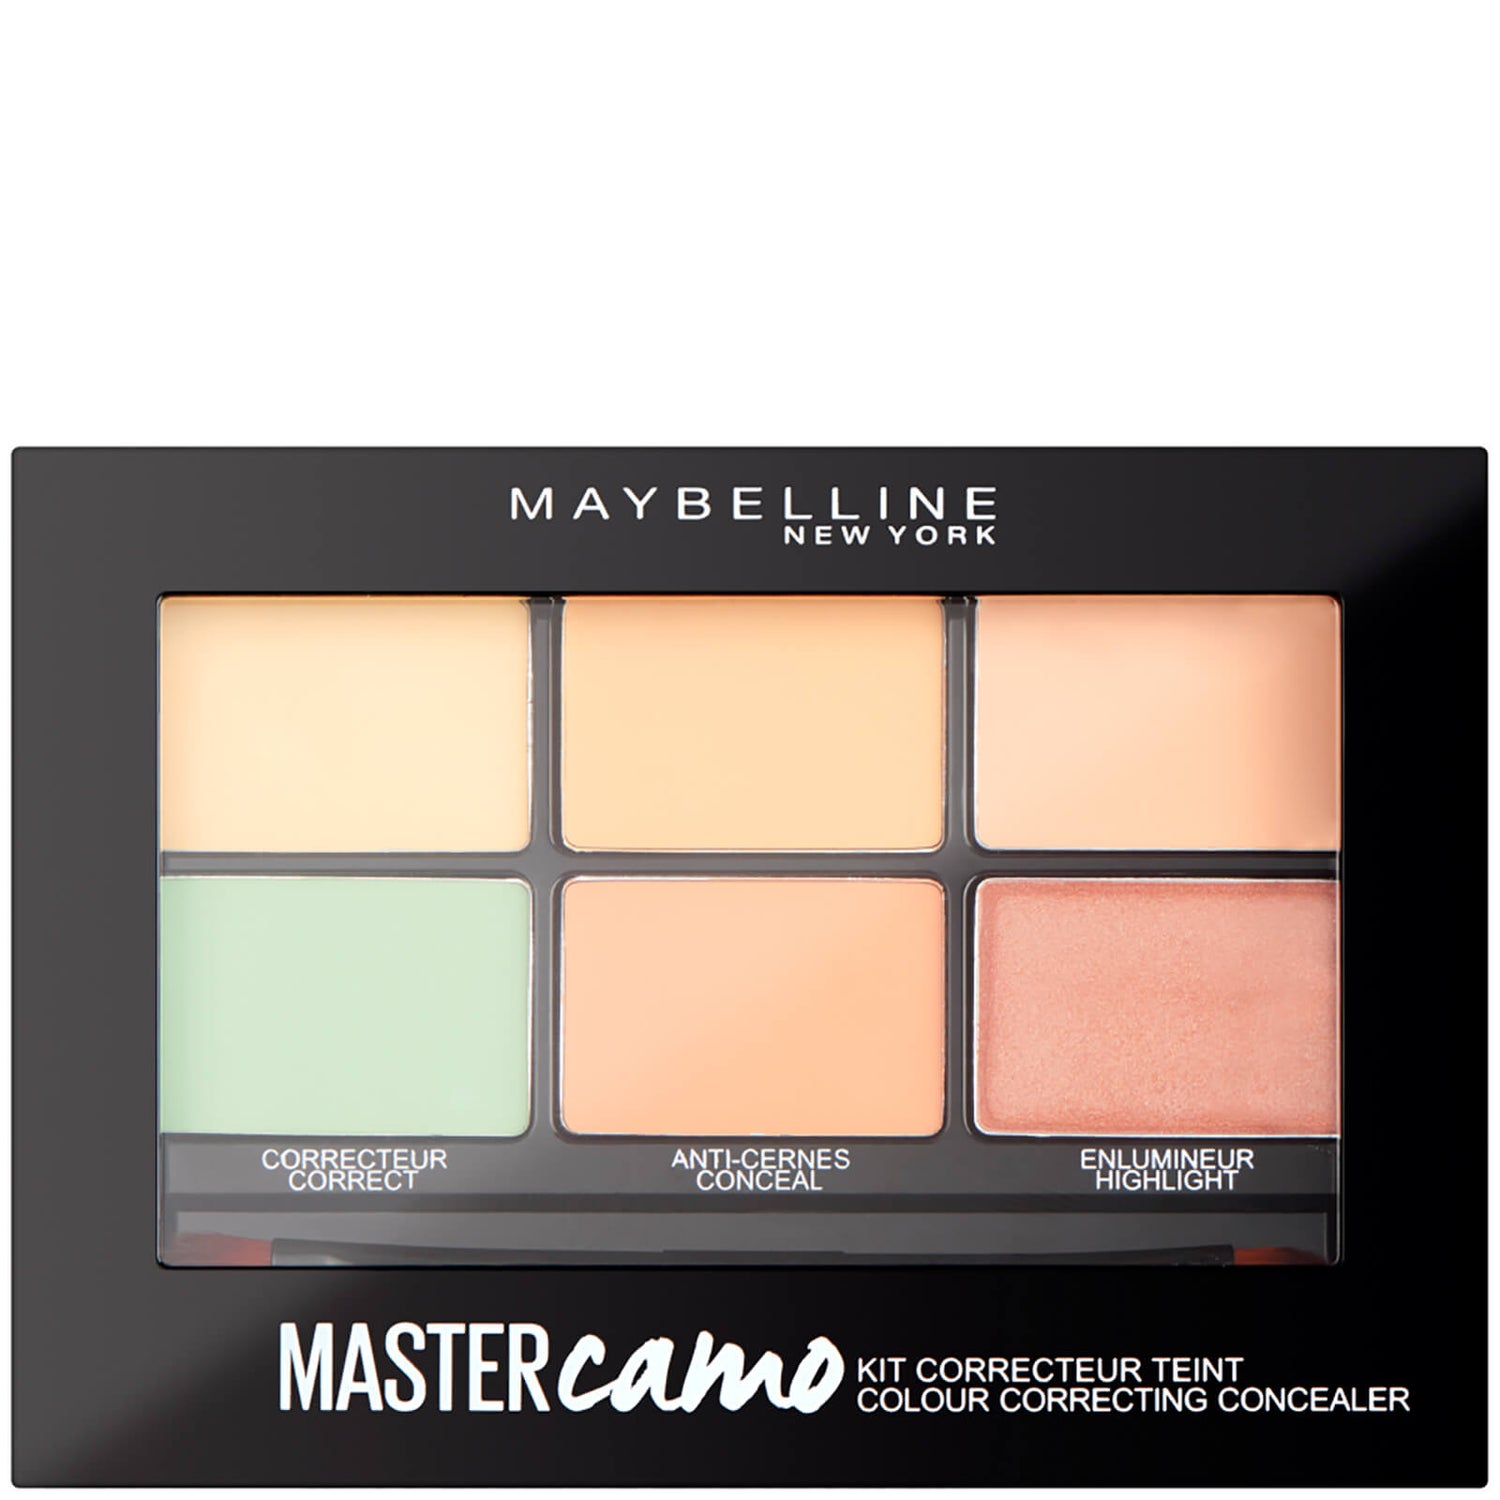 Maybelline Master Camo Color Correcting Concealer Kit 6g - Light